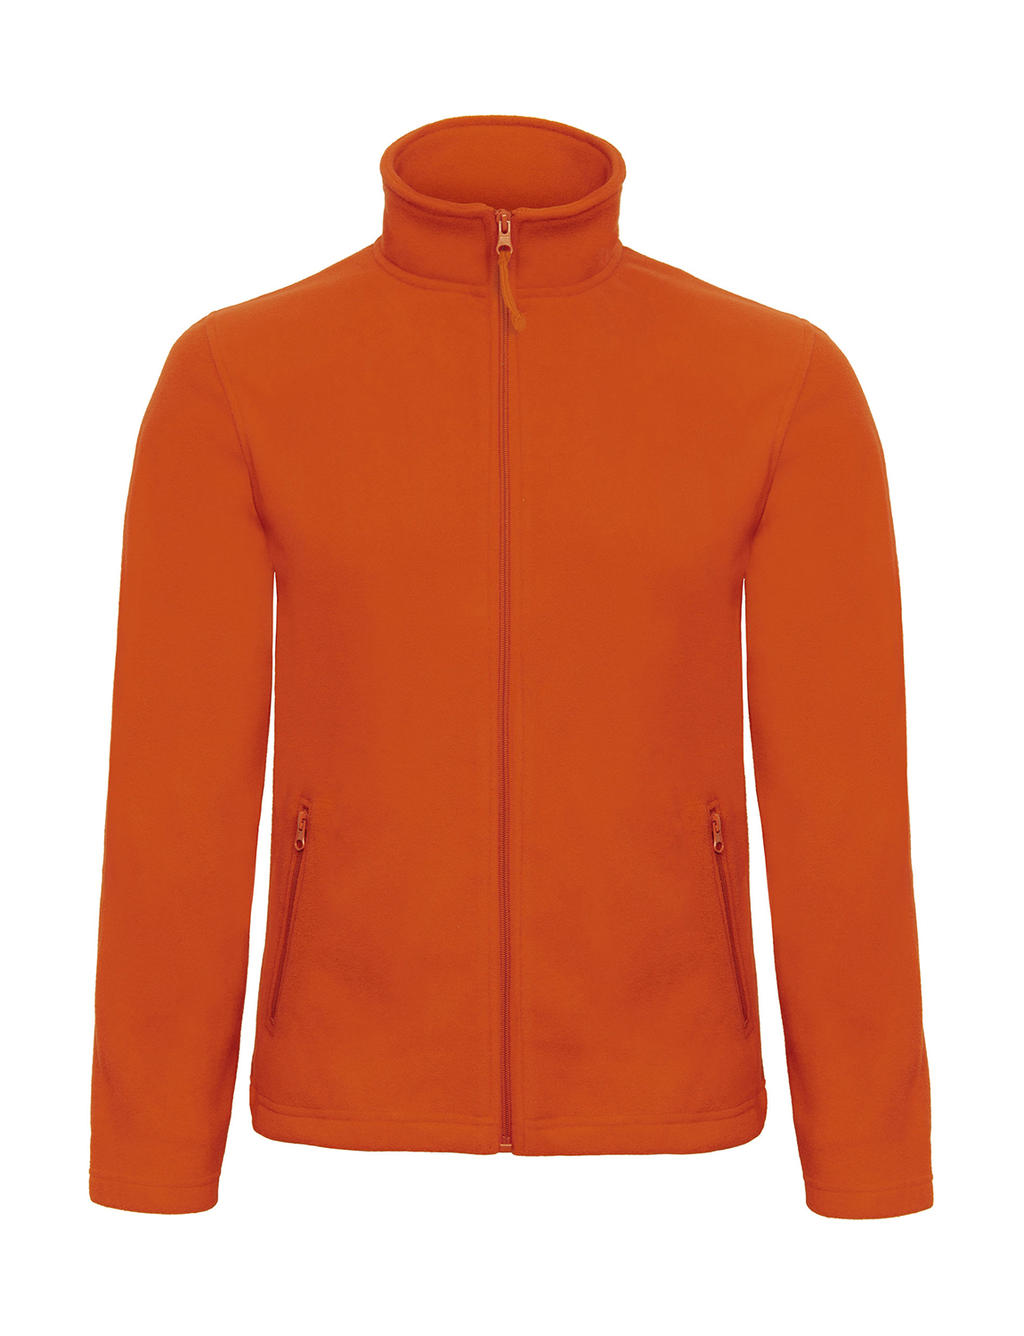  ID.501 Micro Fleece Full Zip in Farbe Pumpkin Orange